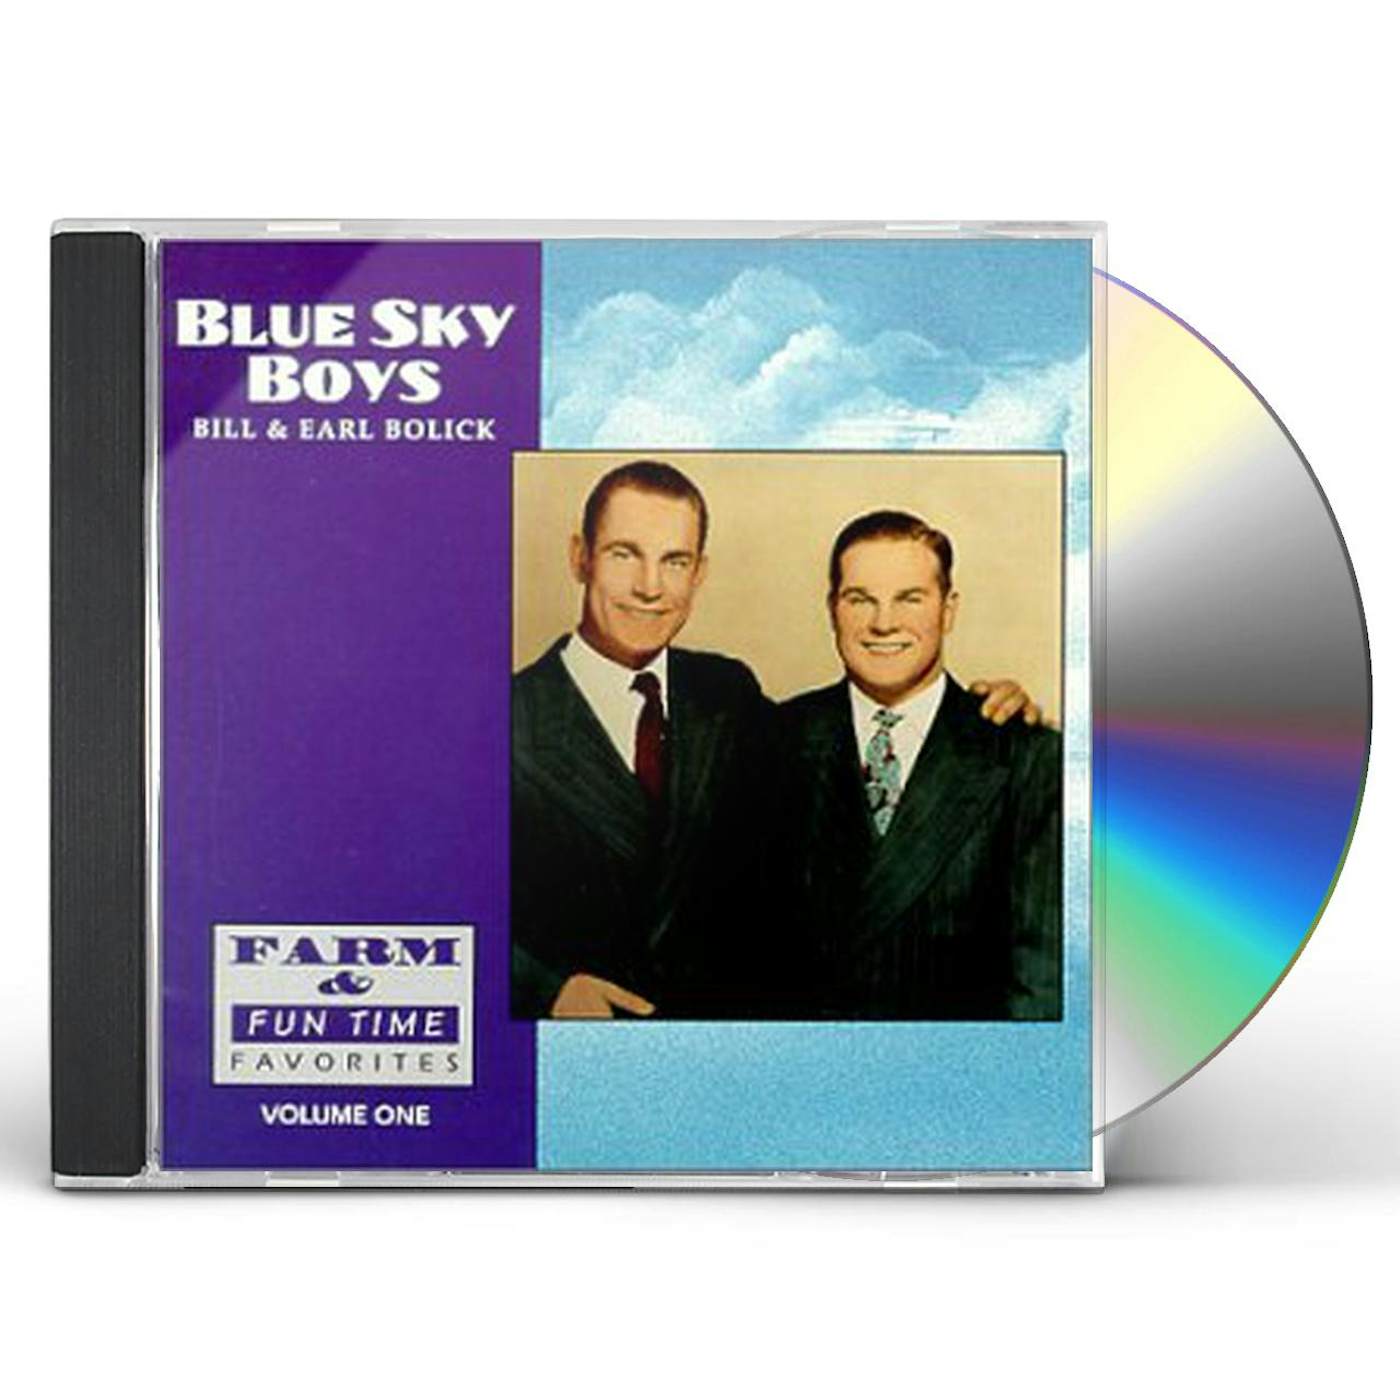 The Blue Sky Boys FARM & FUN TIME FAVORITES 1 CD